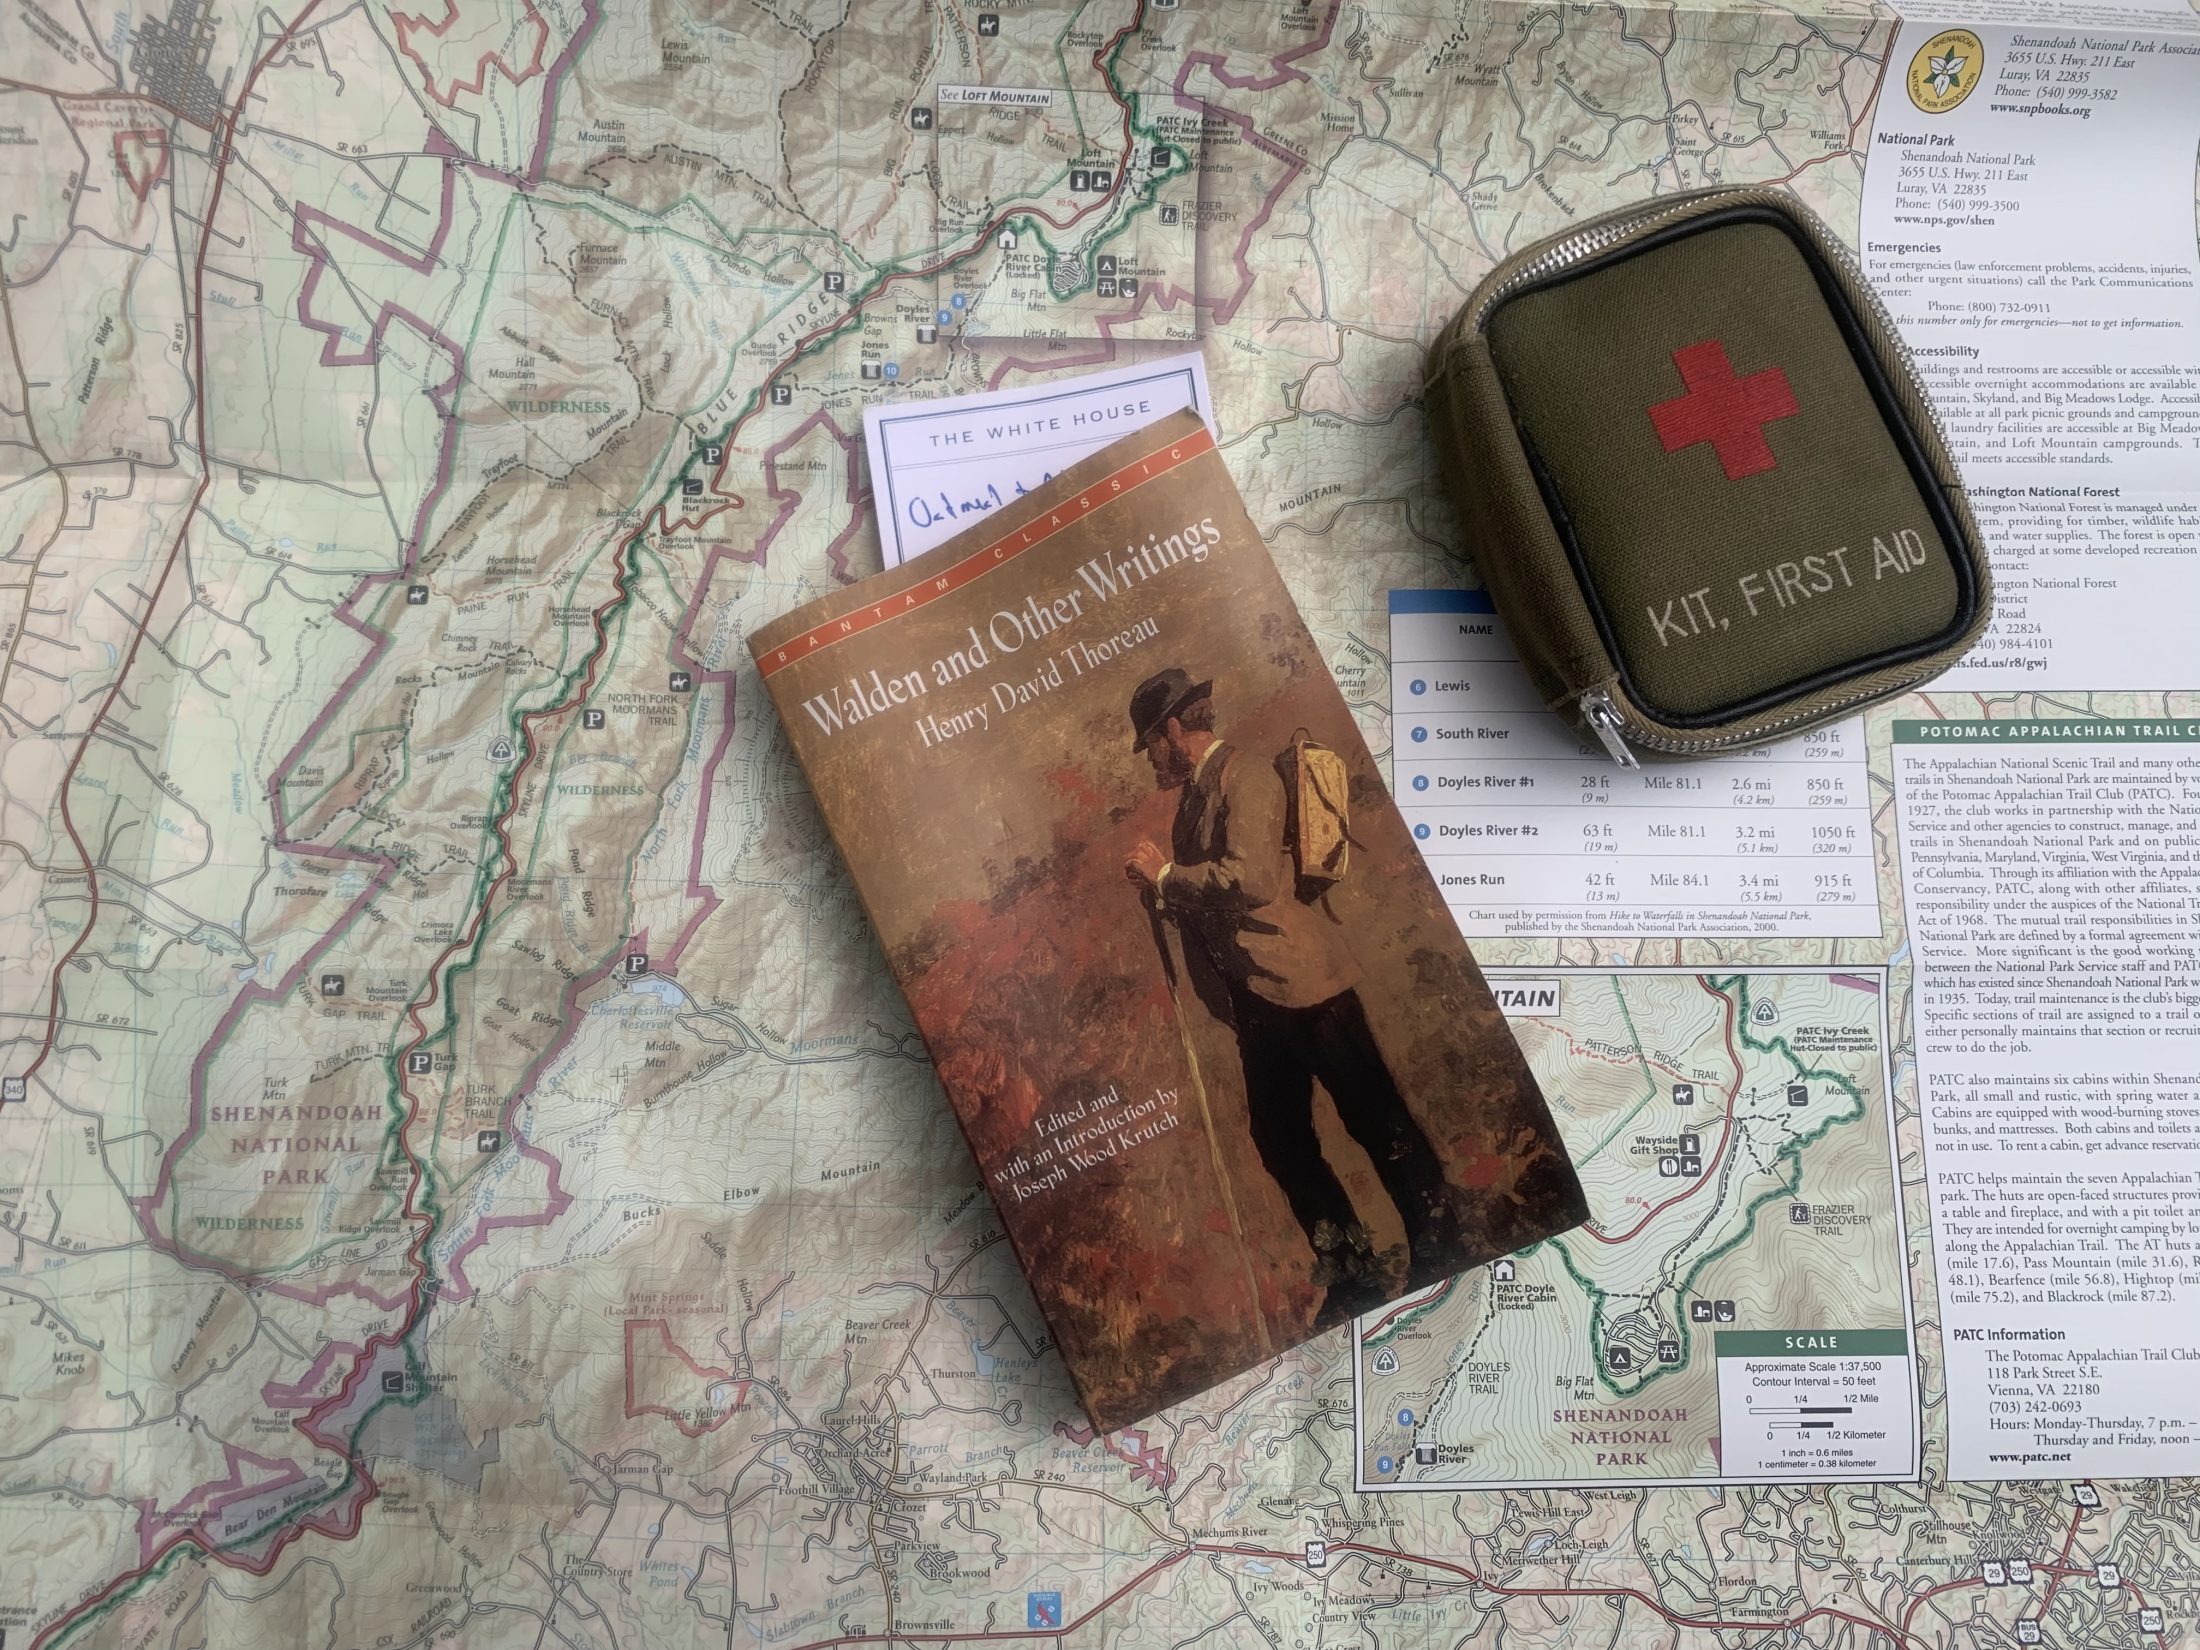 Thoreau book on map belonging to husband of DC widow blog writer Marjorie Brimley